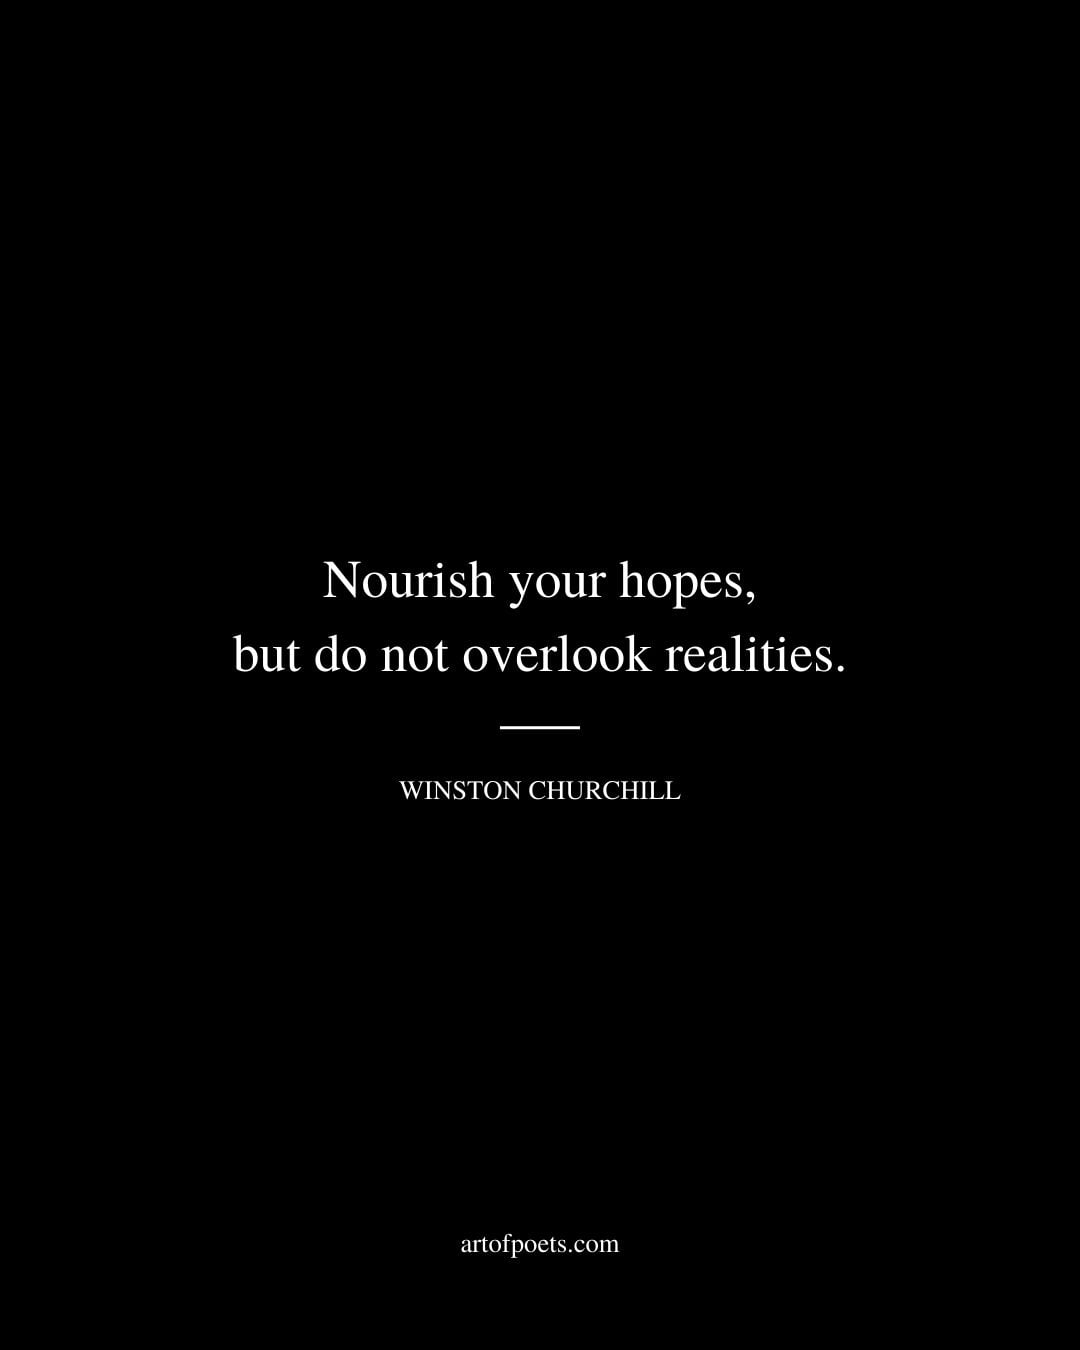 Nourish your hopes but do not overlook realities